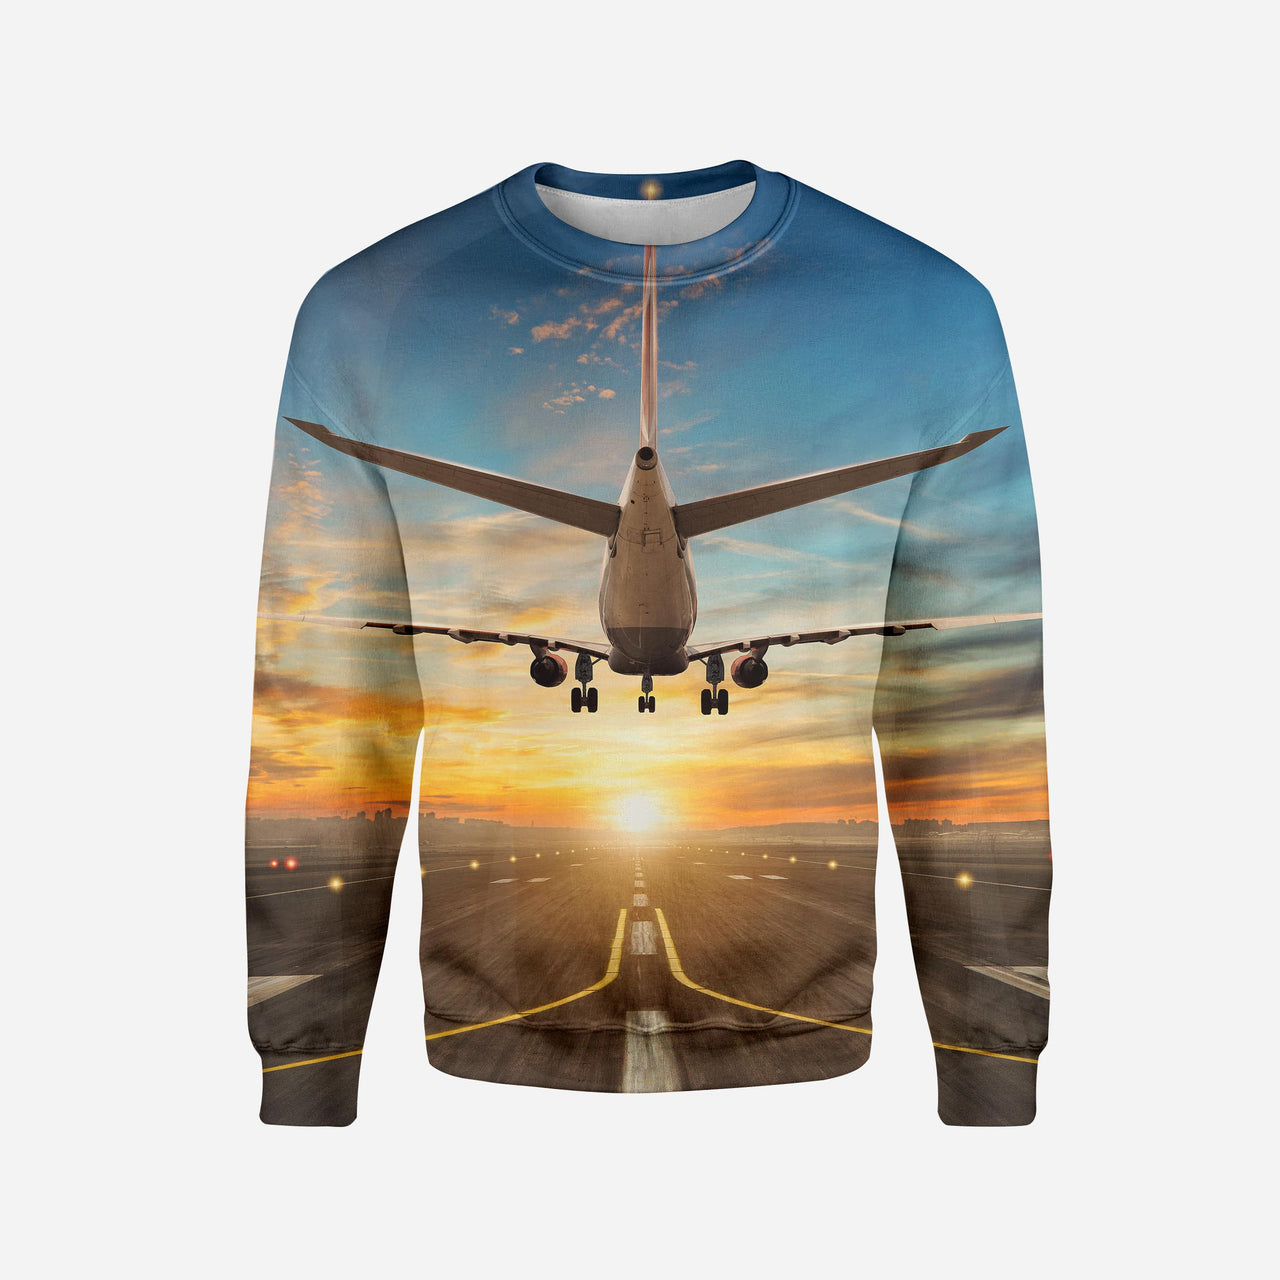 Airplane over Runway Towards the Sunrise Printed 3D Sweatshirts